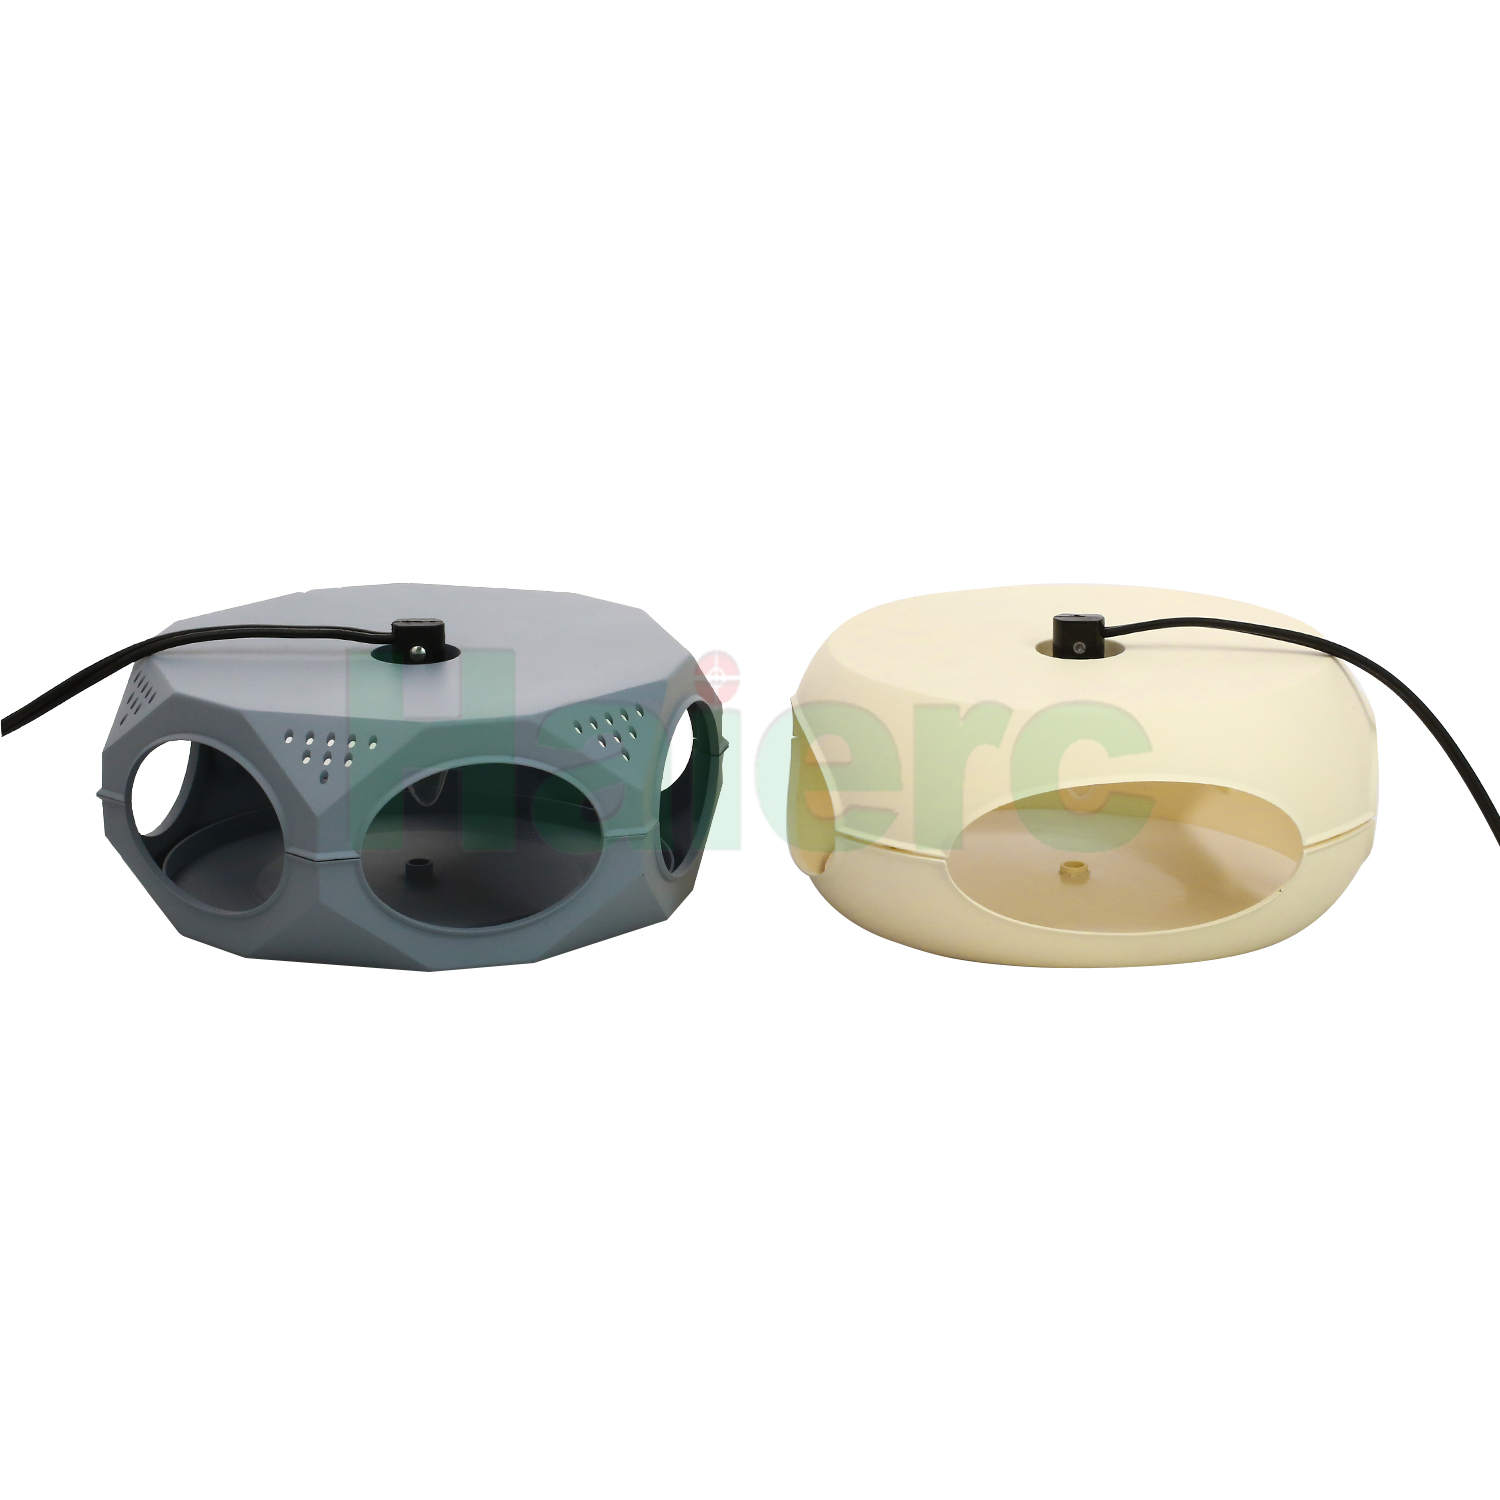 Haierc Eco-friendy Flea Trap Lamp/Bed Bug Trap HC4614